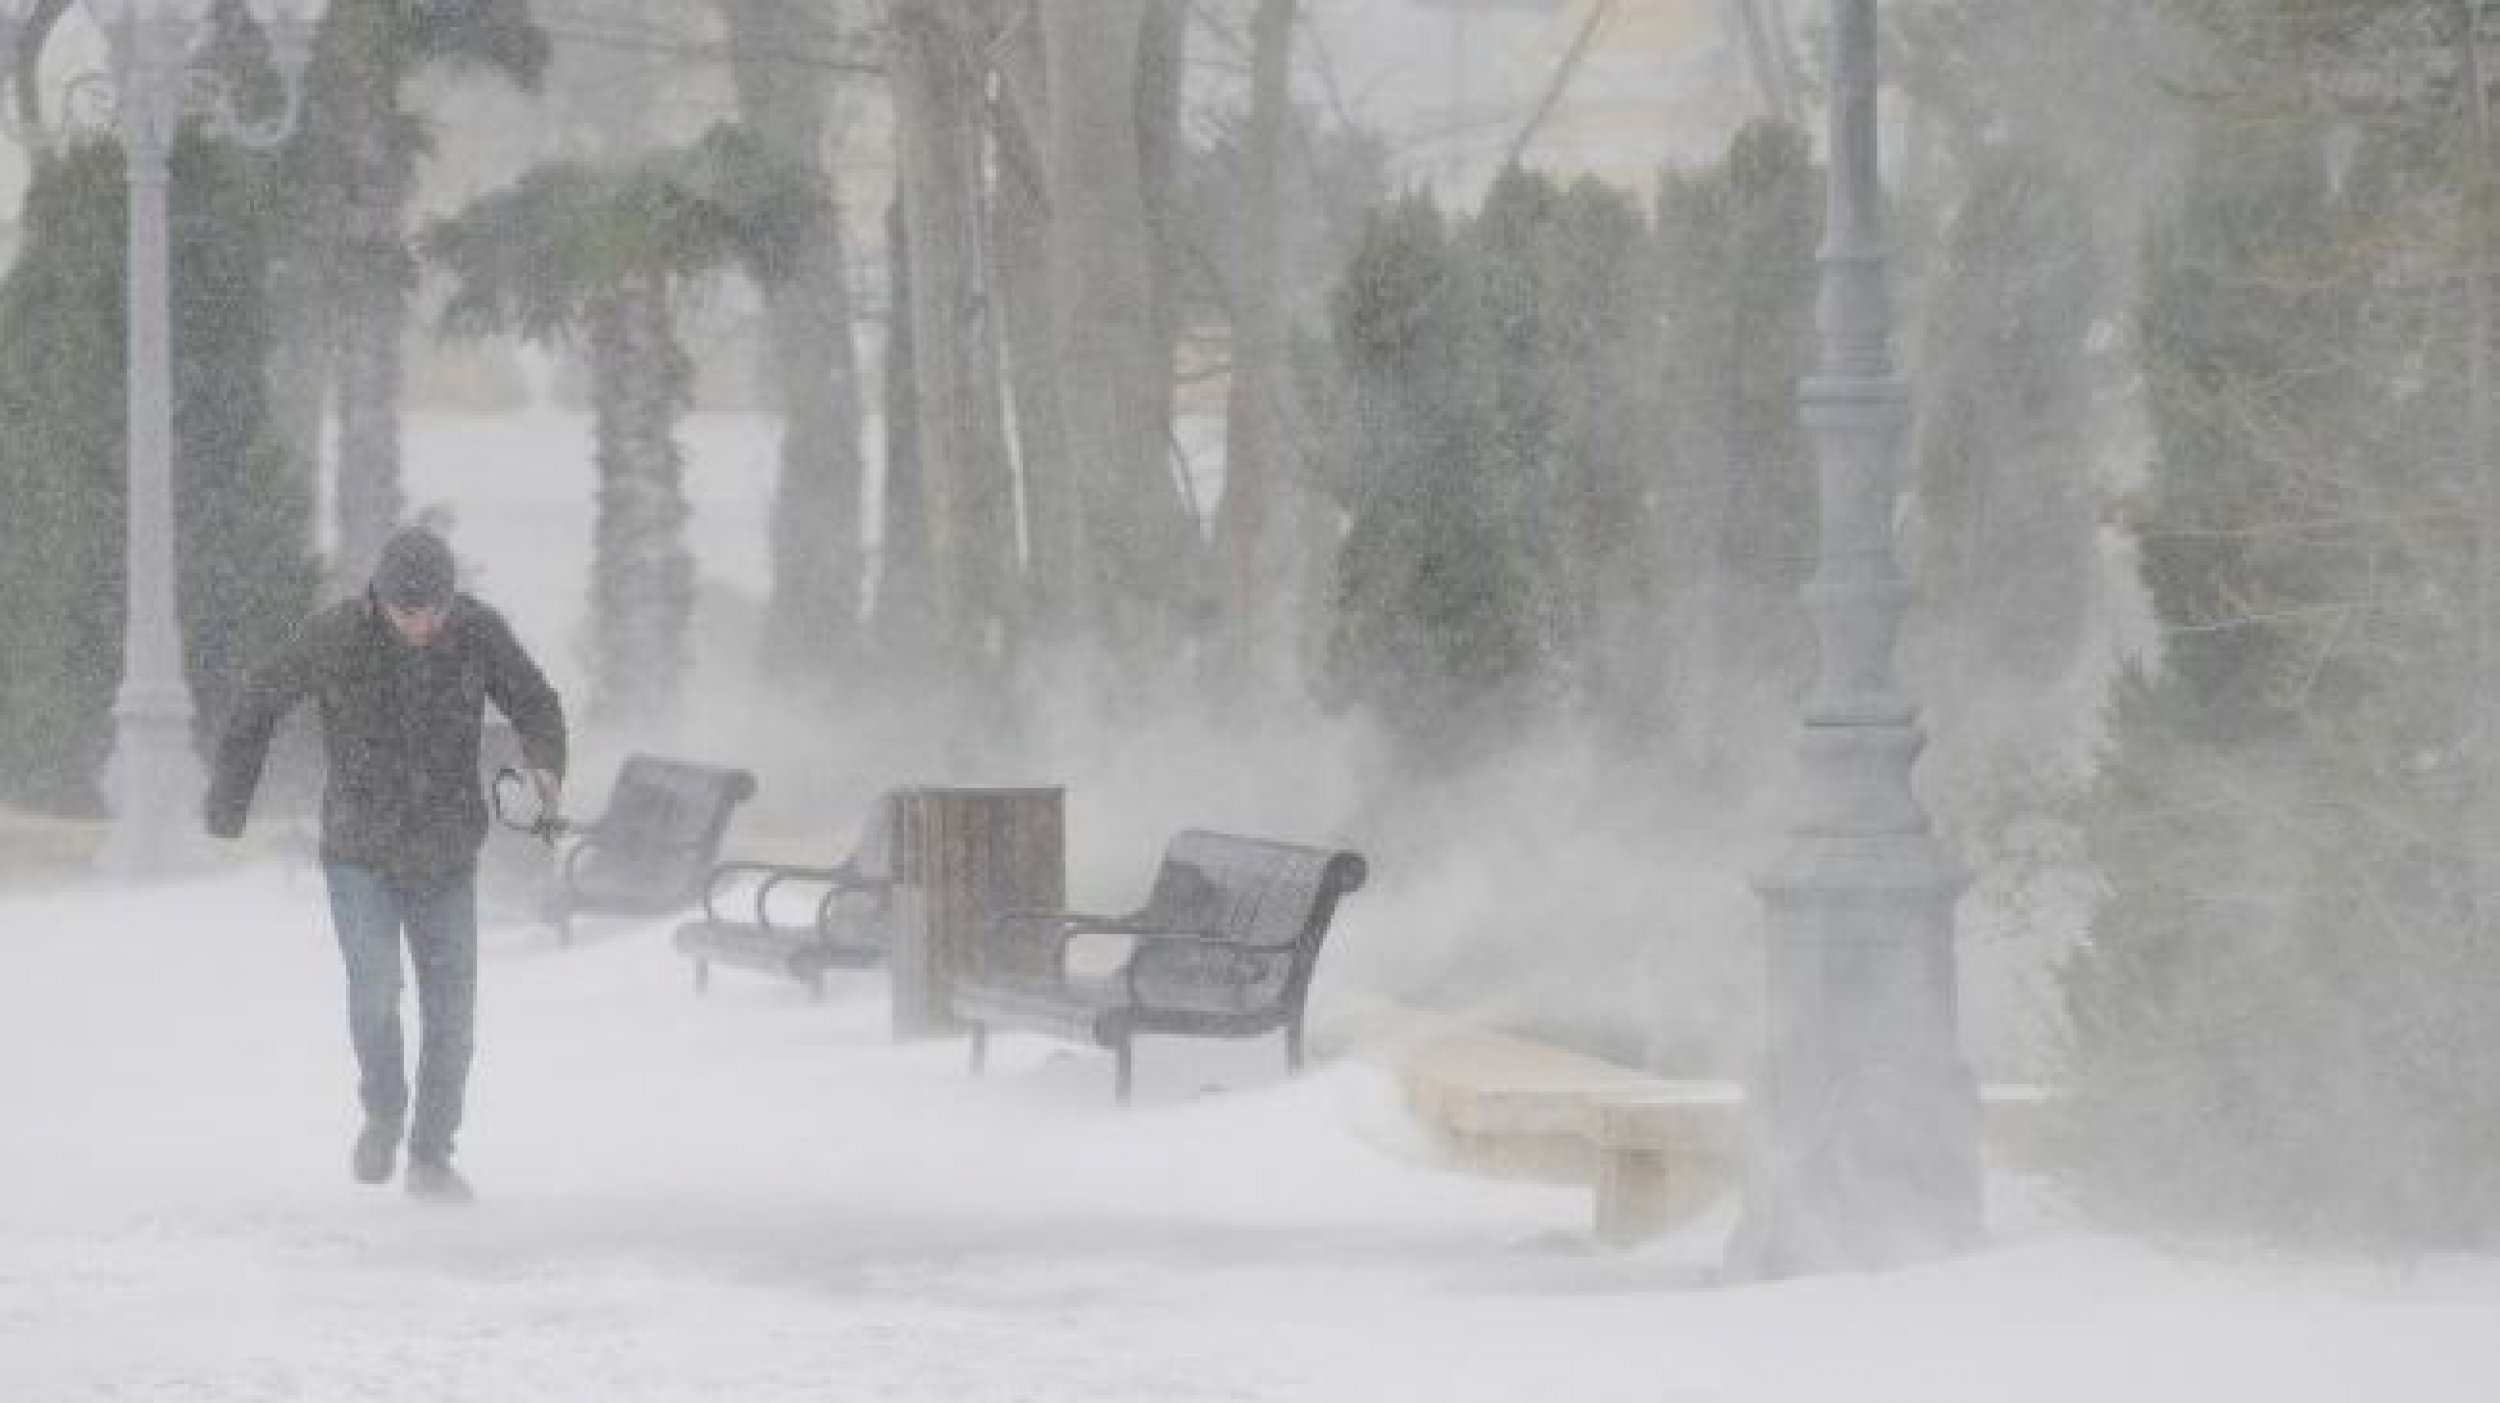 Fatal European Winter Kills More than 300 People